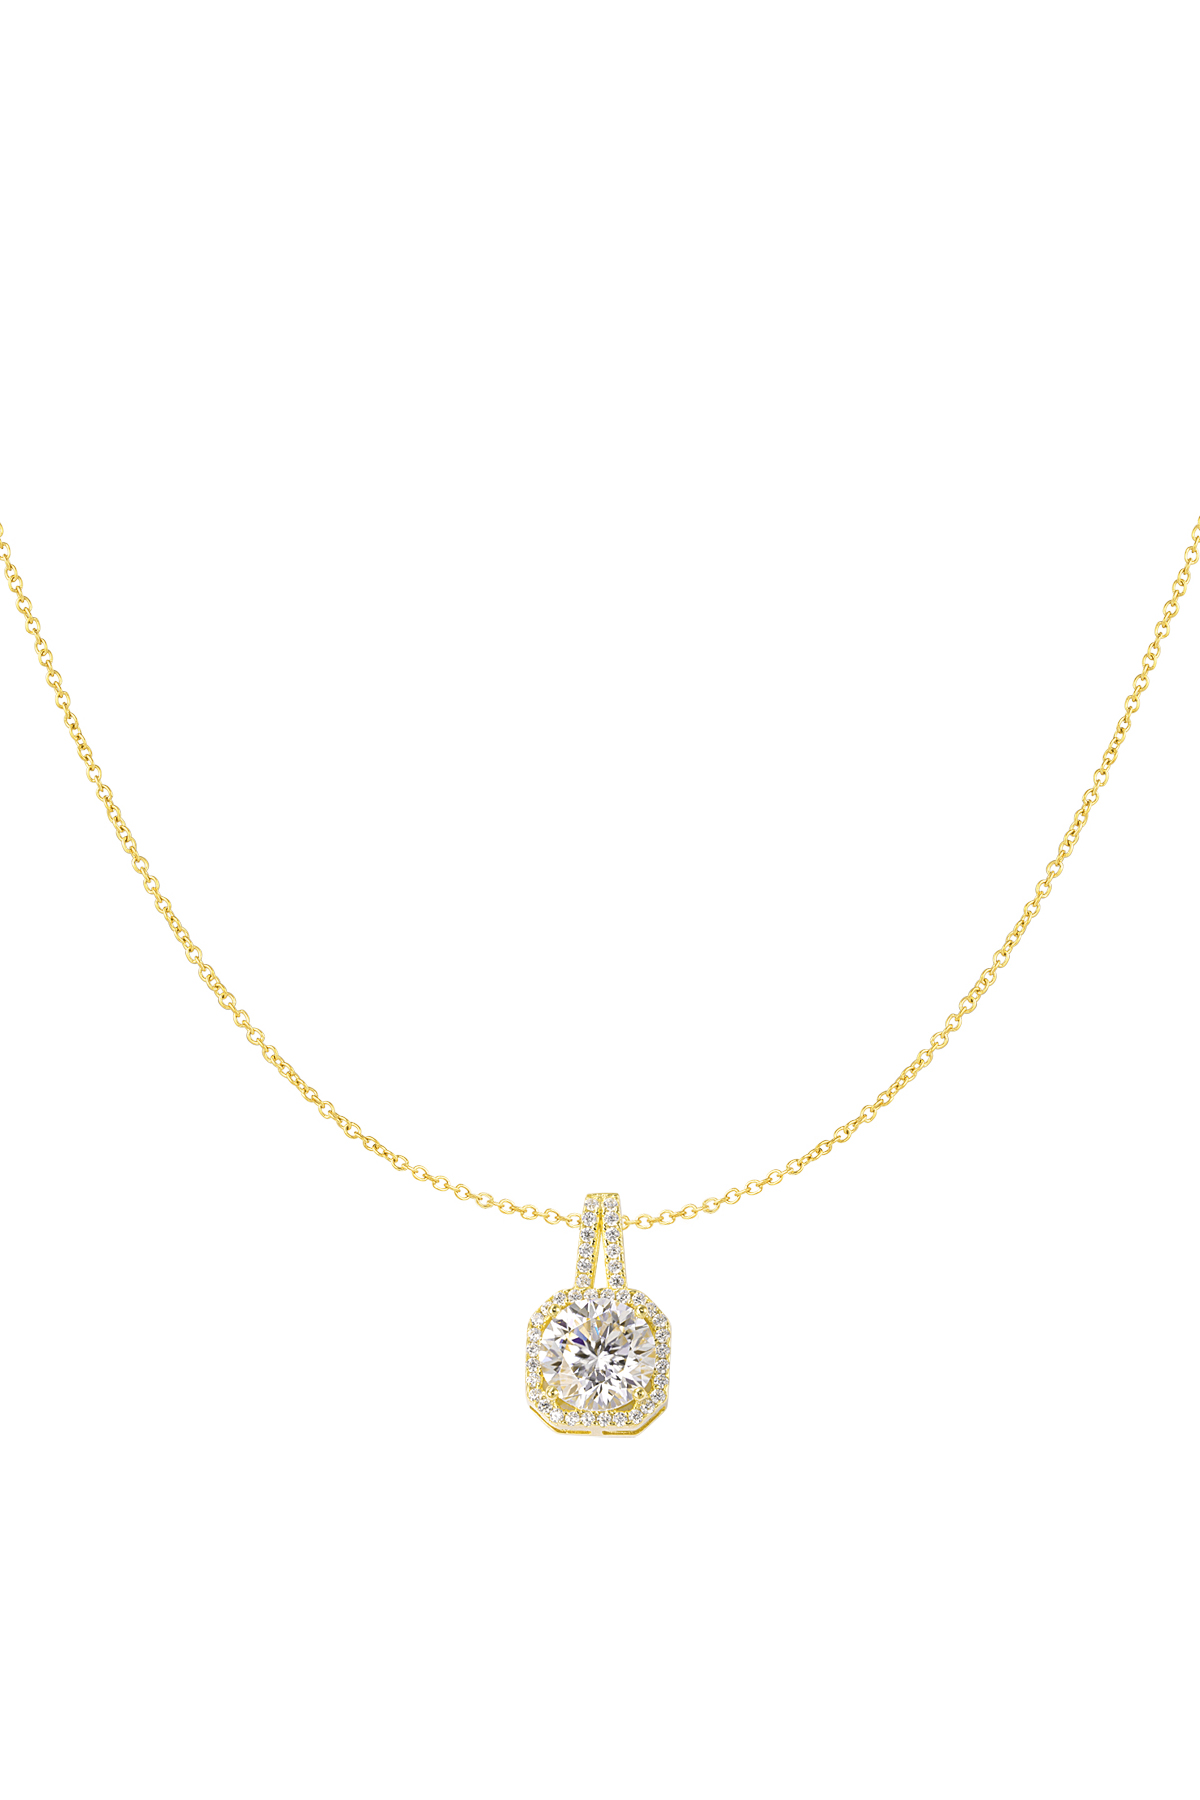 Necklace square stone - gold 